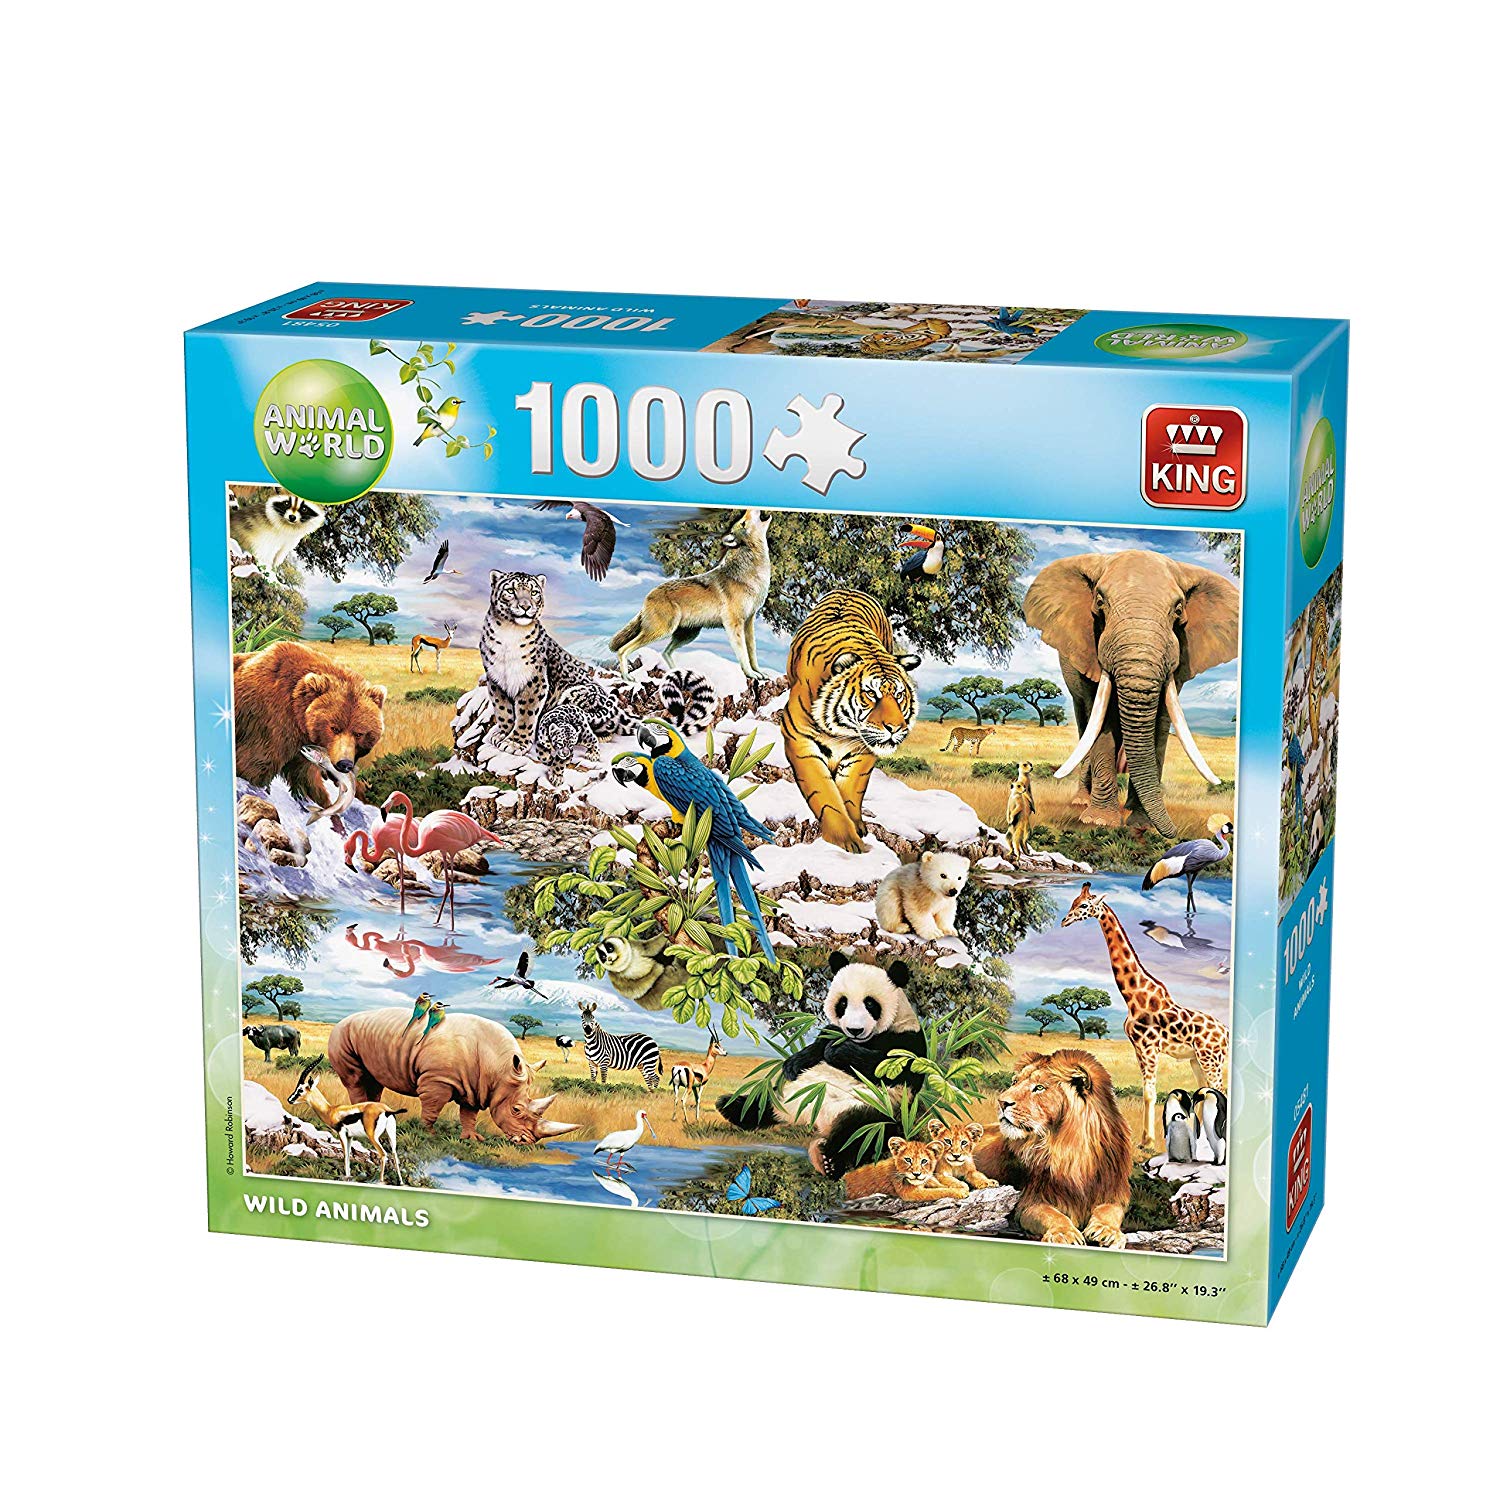 King Kng05481 Animal World Wild Animal Jigsaw Puzzle (1000 Pieces) (English